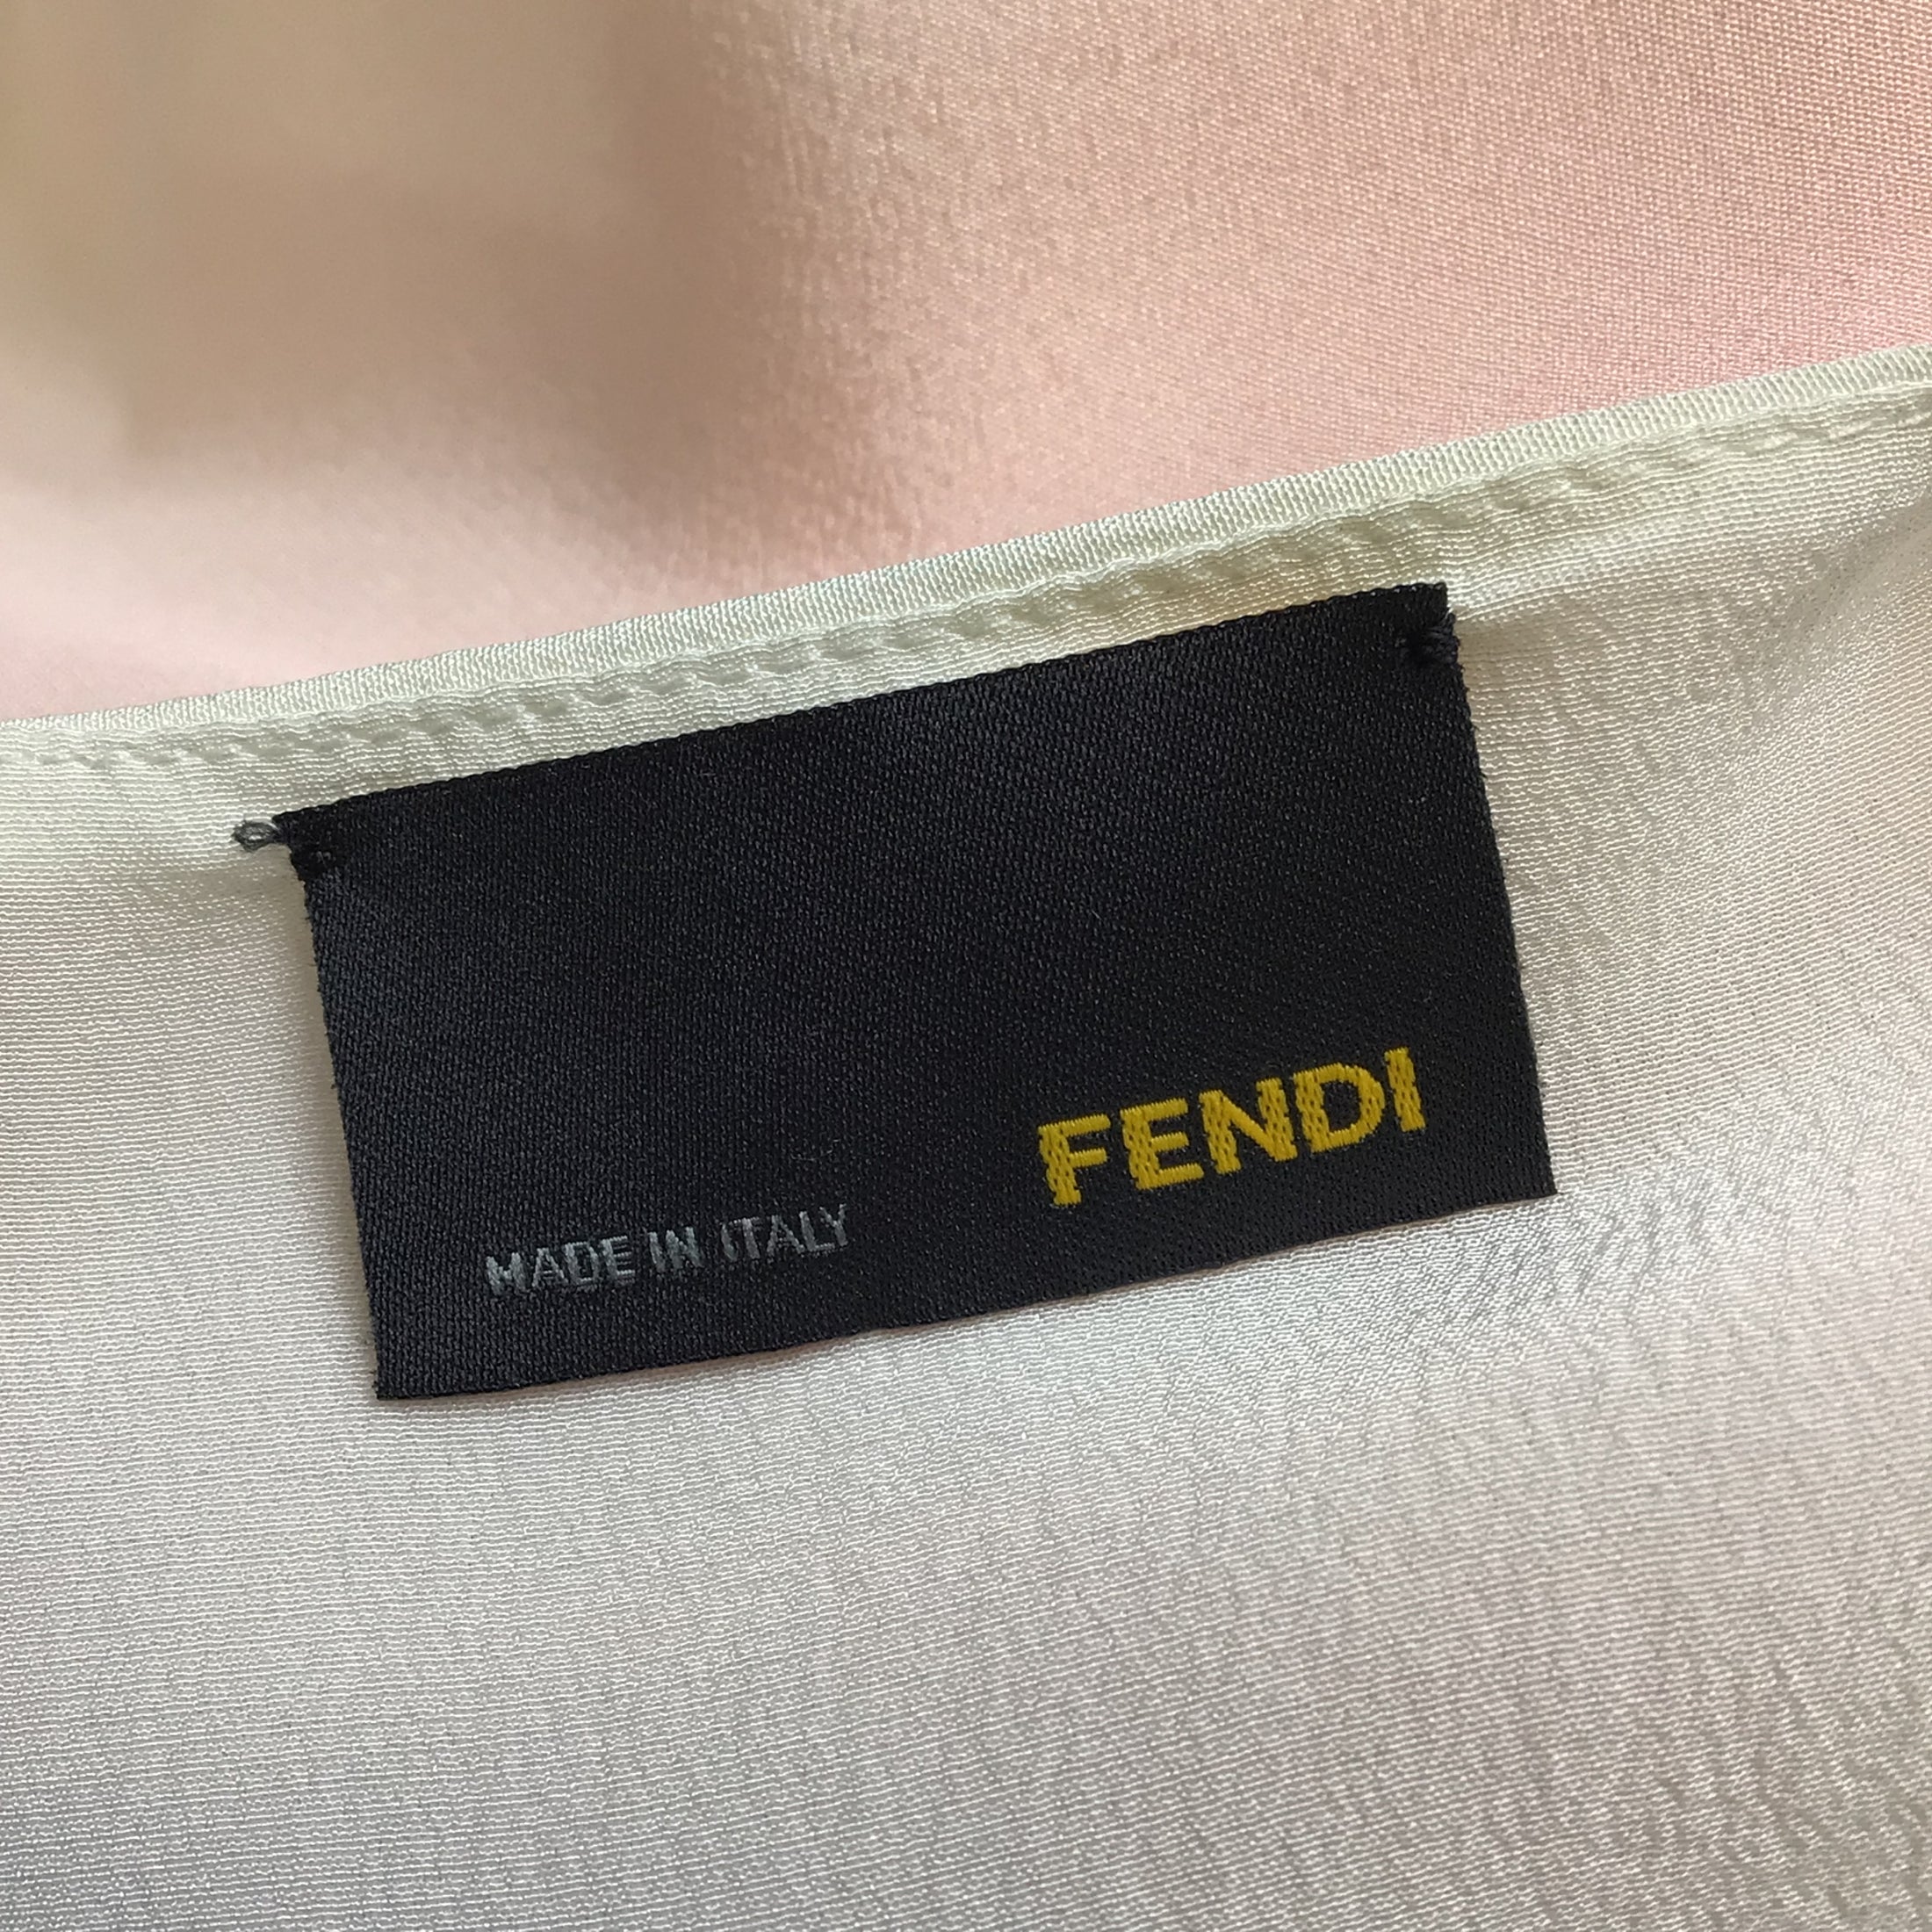 Fendi Ivory / Red Printed Silk Midi Dress